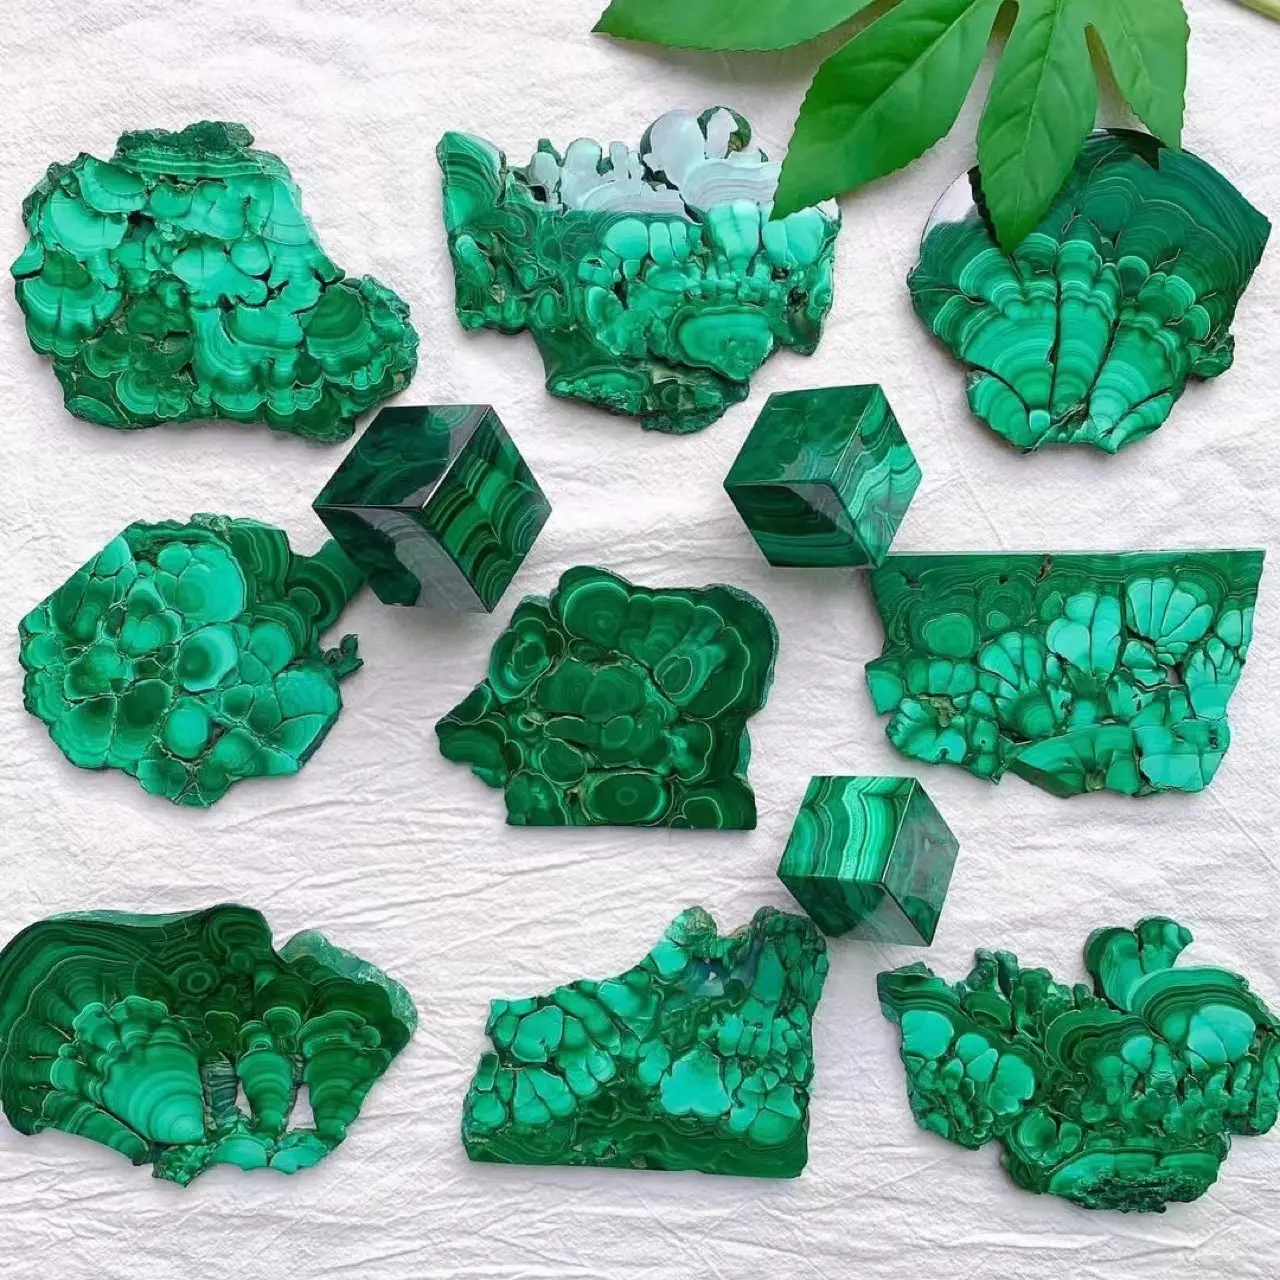 Wholesale Natural Malachite Slab Polished Stone Healing Gemstone Malachite Crystal Green Stone Slice Slabs Gift For Fengshui